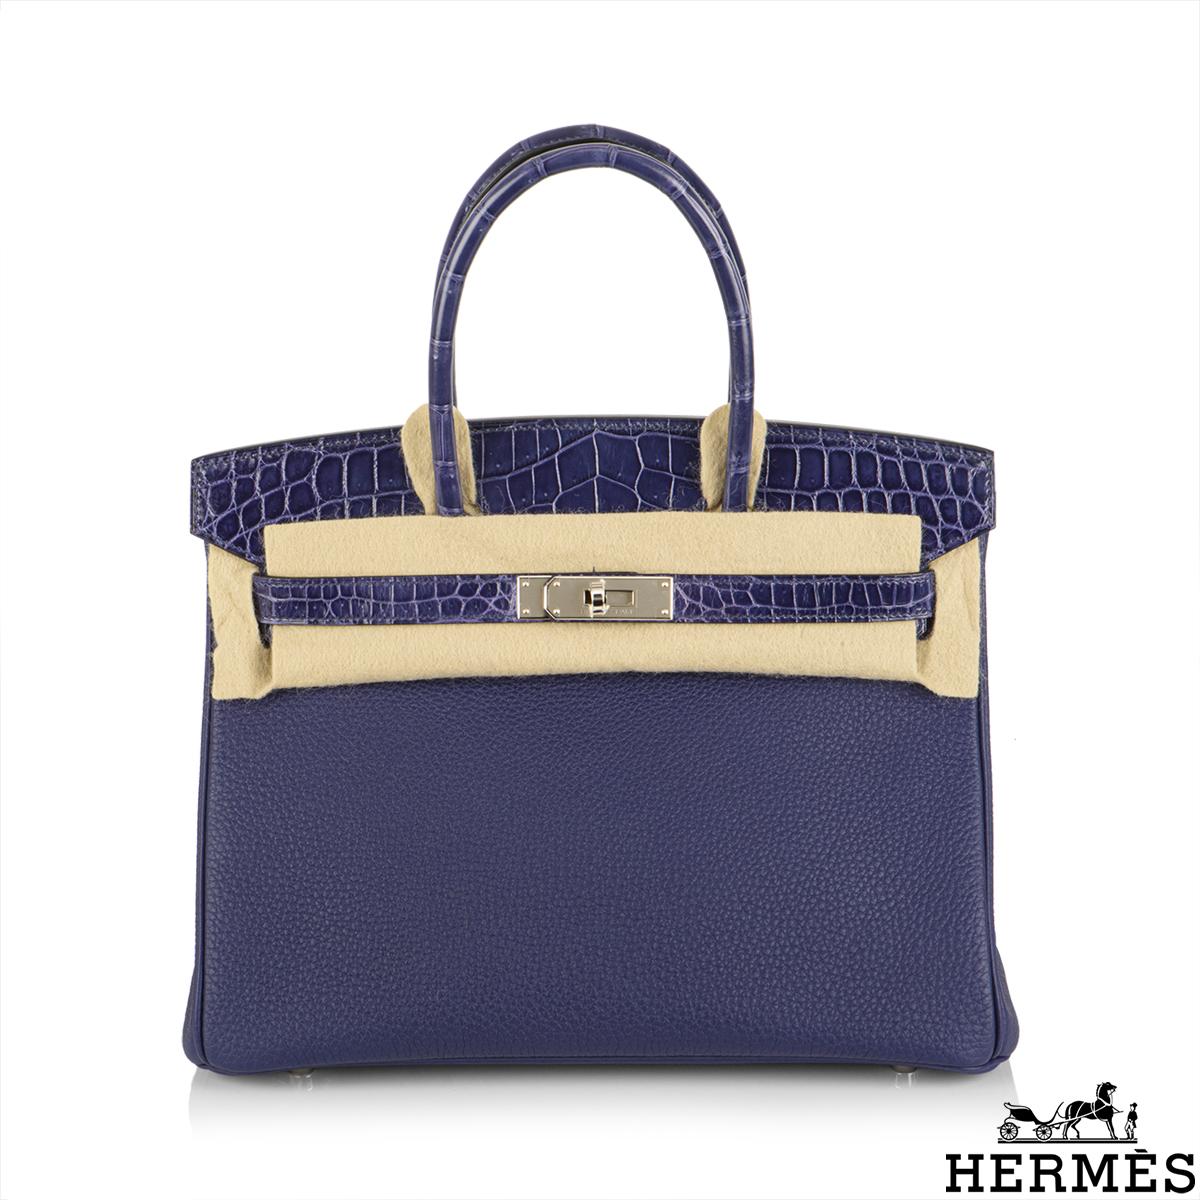 An exquisite Hermès Touch Birkin 30 cm bag. The exterior of this Birkin 